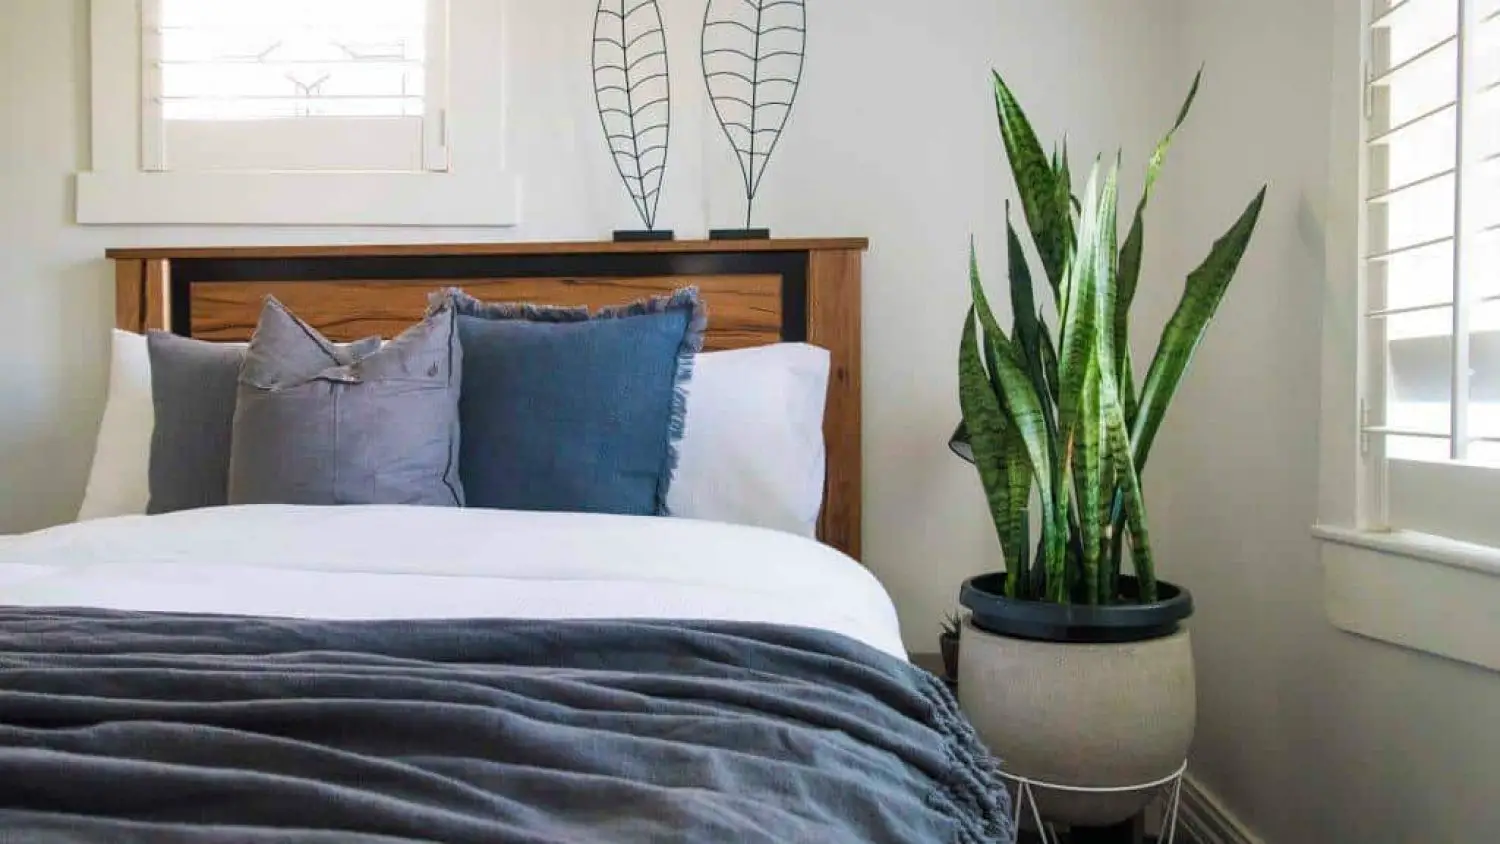 Top 5 Sleep Enhancing Bedroom Plants that Will Change Your Life